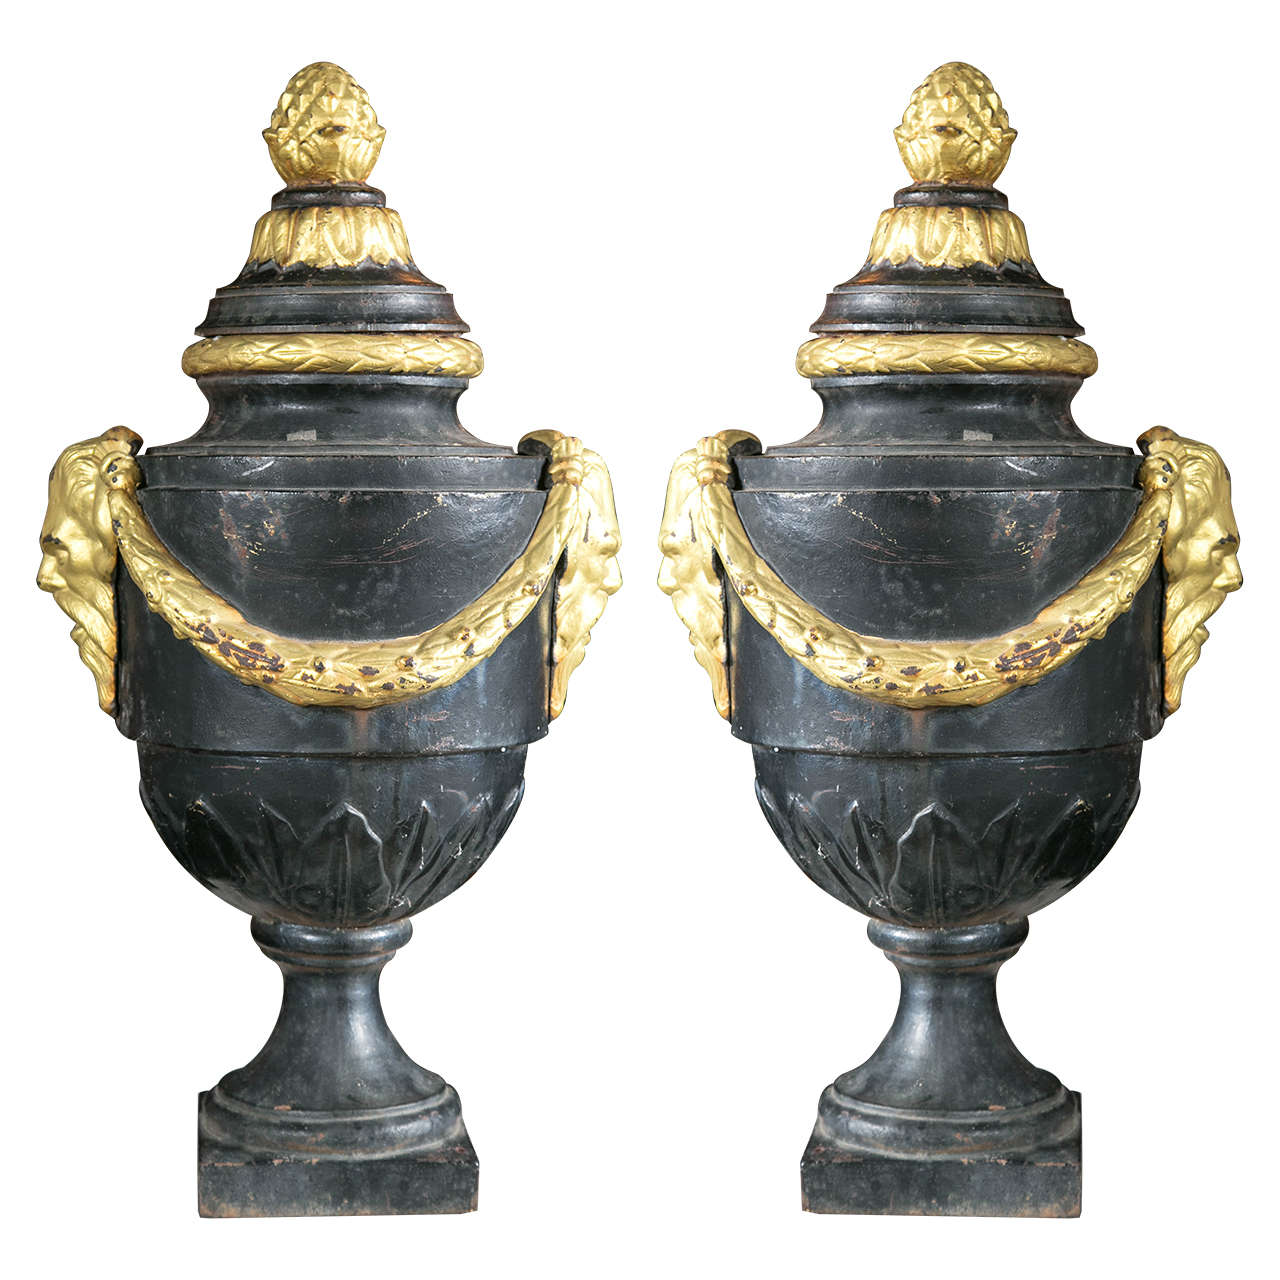 Pair of Cast Iron Lidded Urns